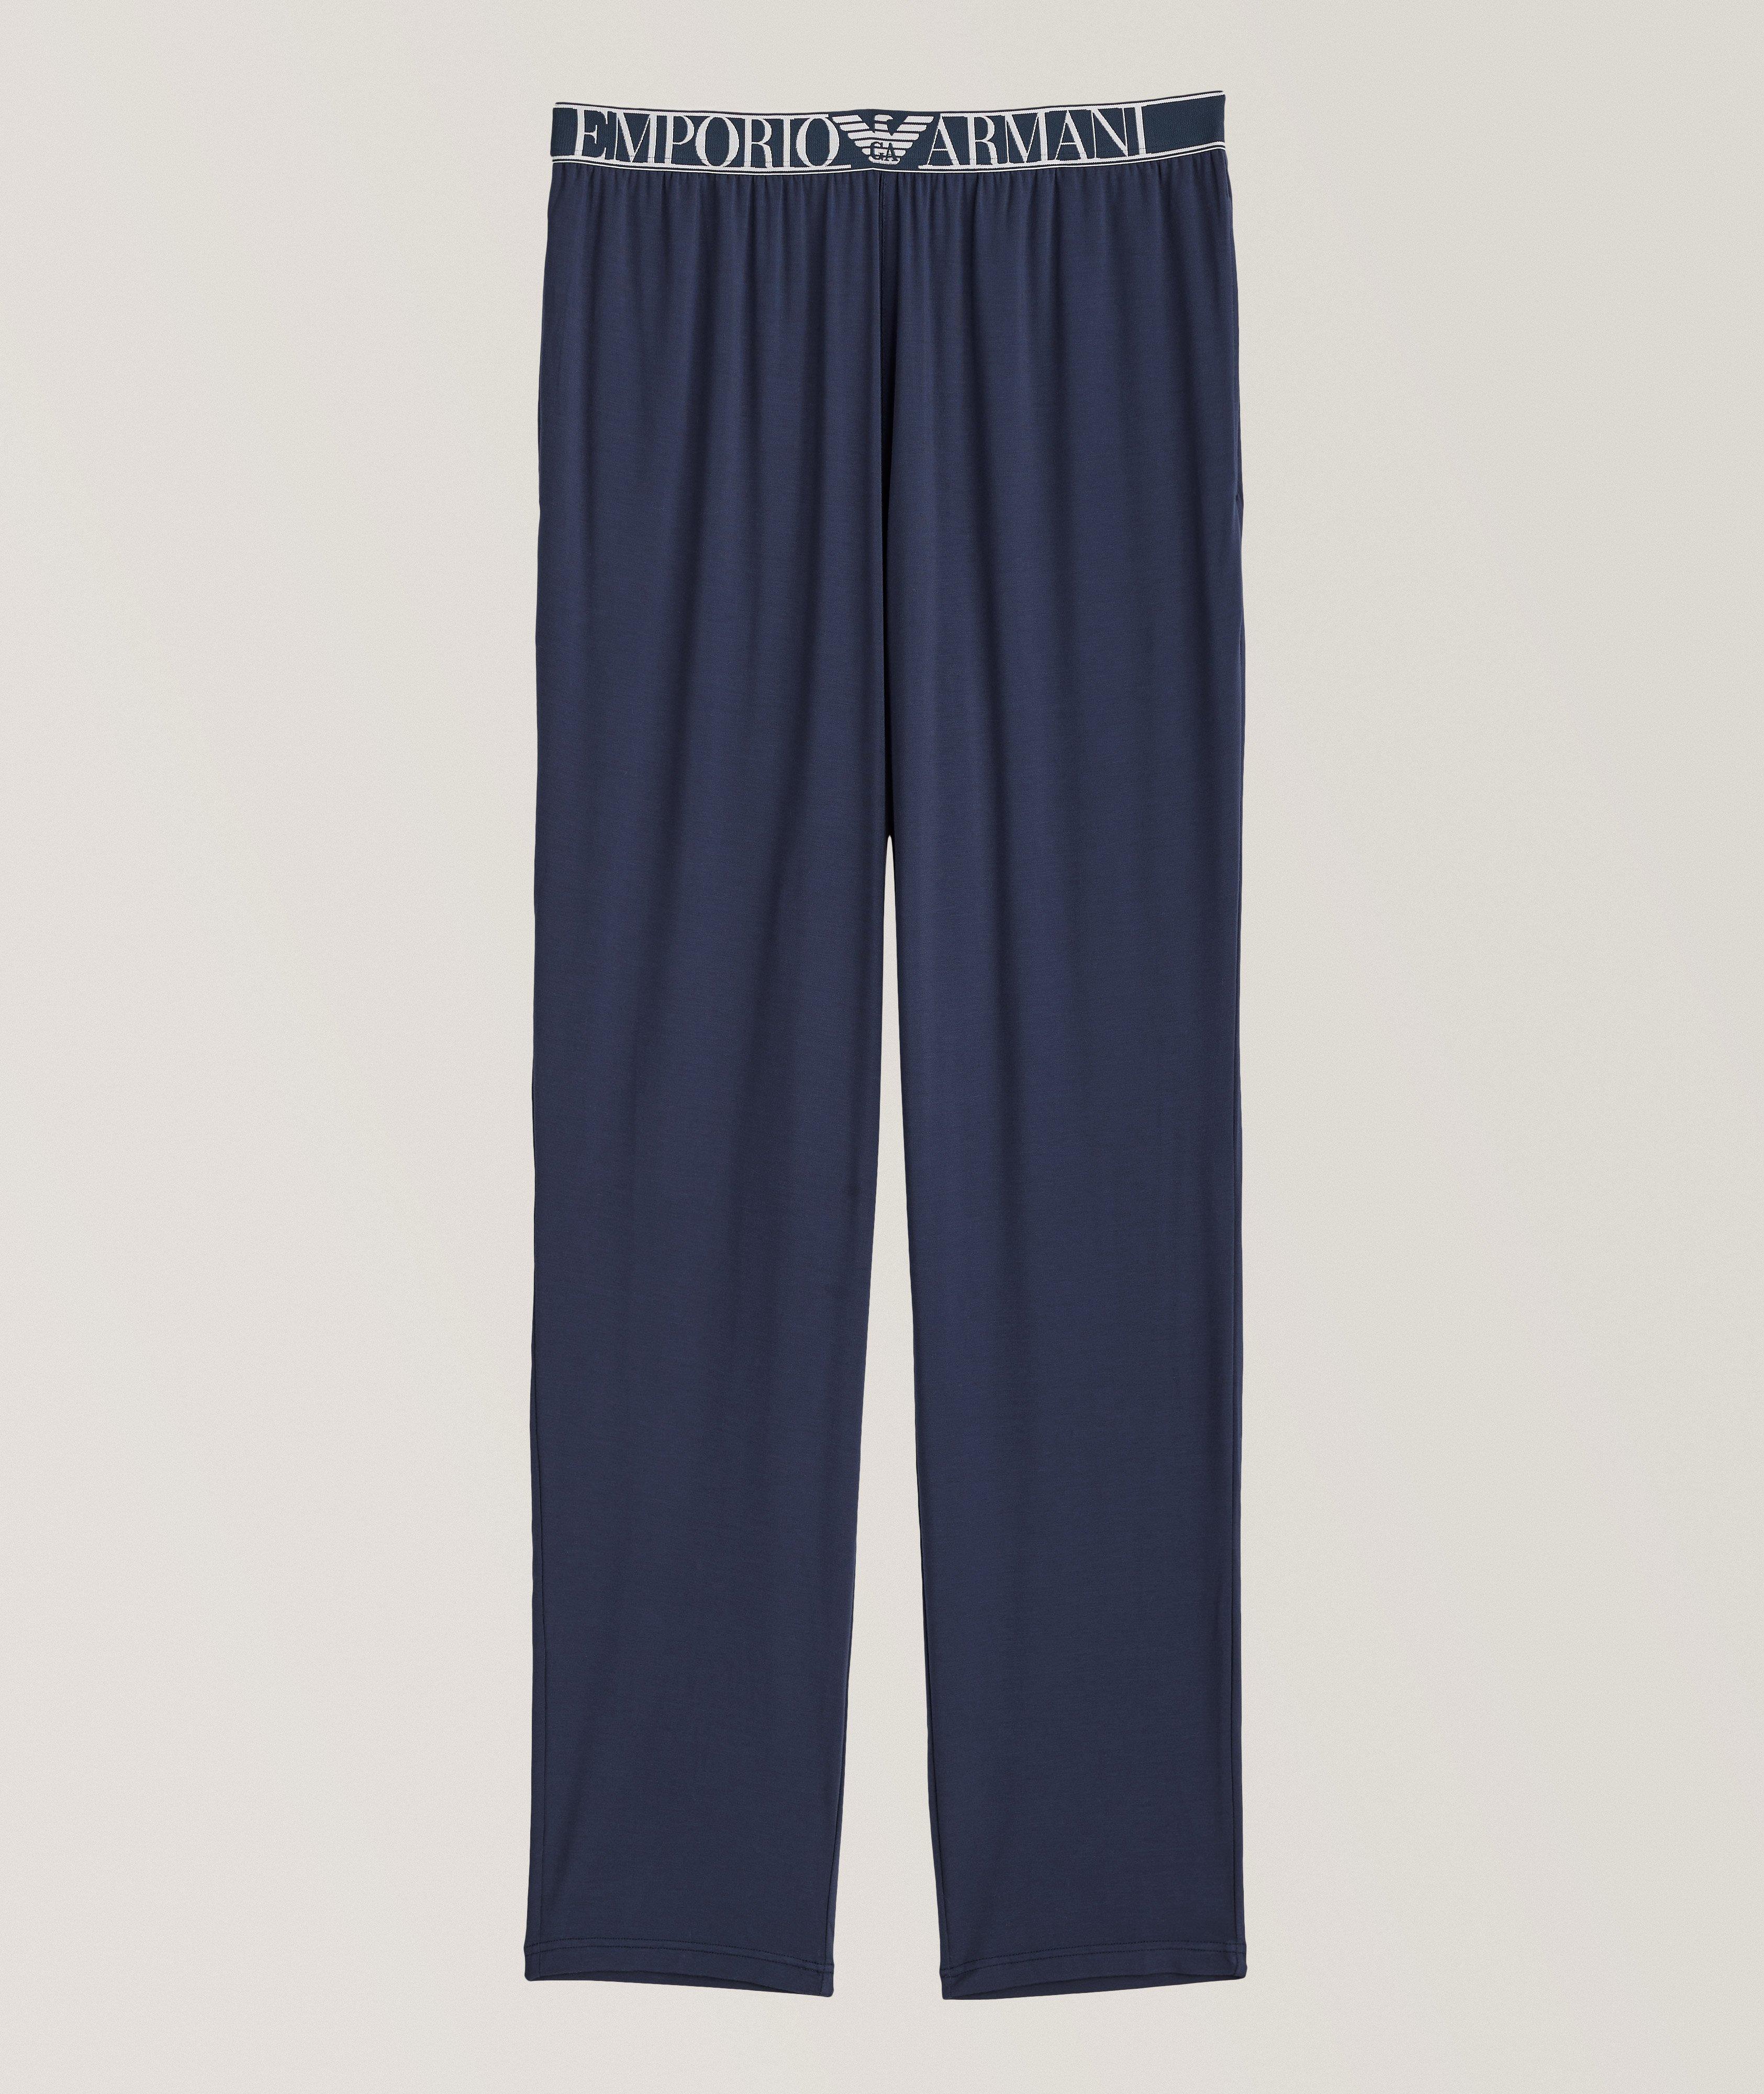 Branded Band Stretch-Modal Pajama Pants